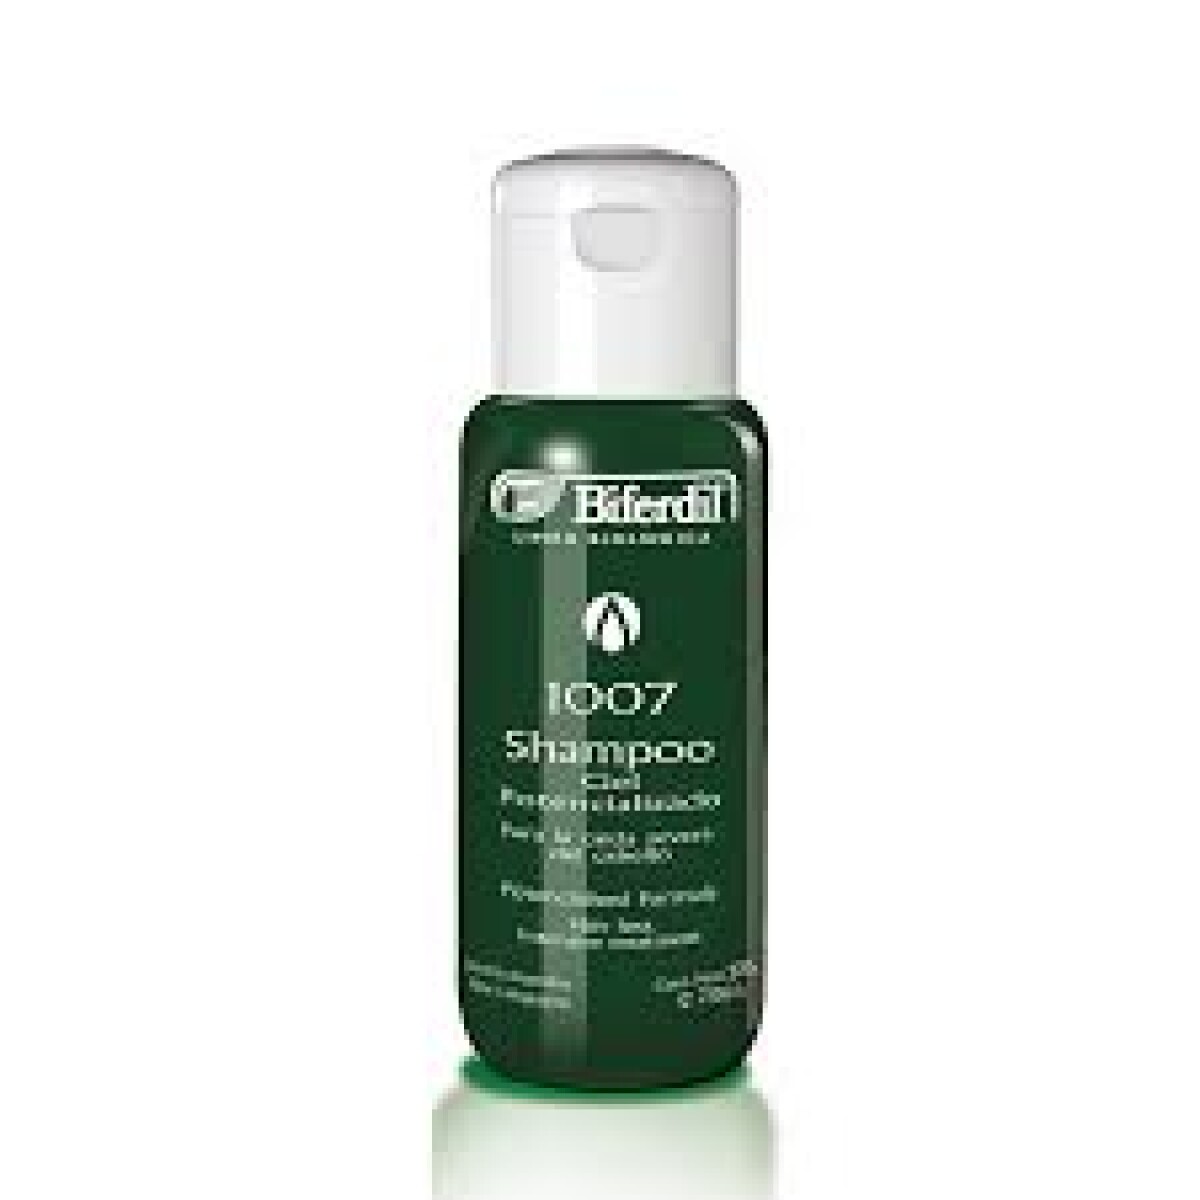 Biferdil 1007 shampoo gel potencializado 200 ml 